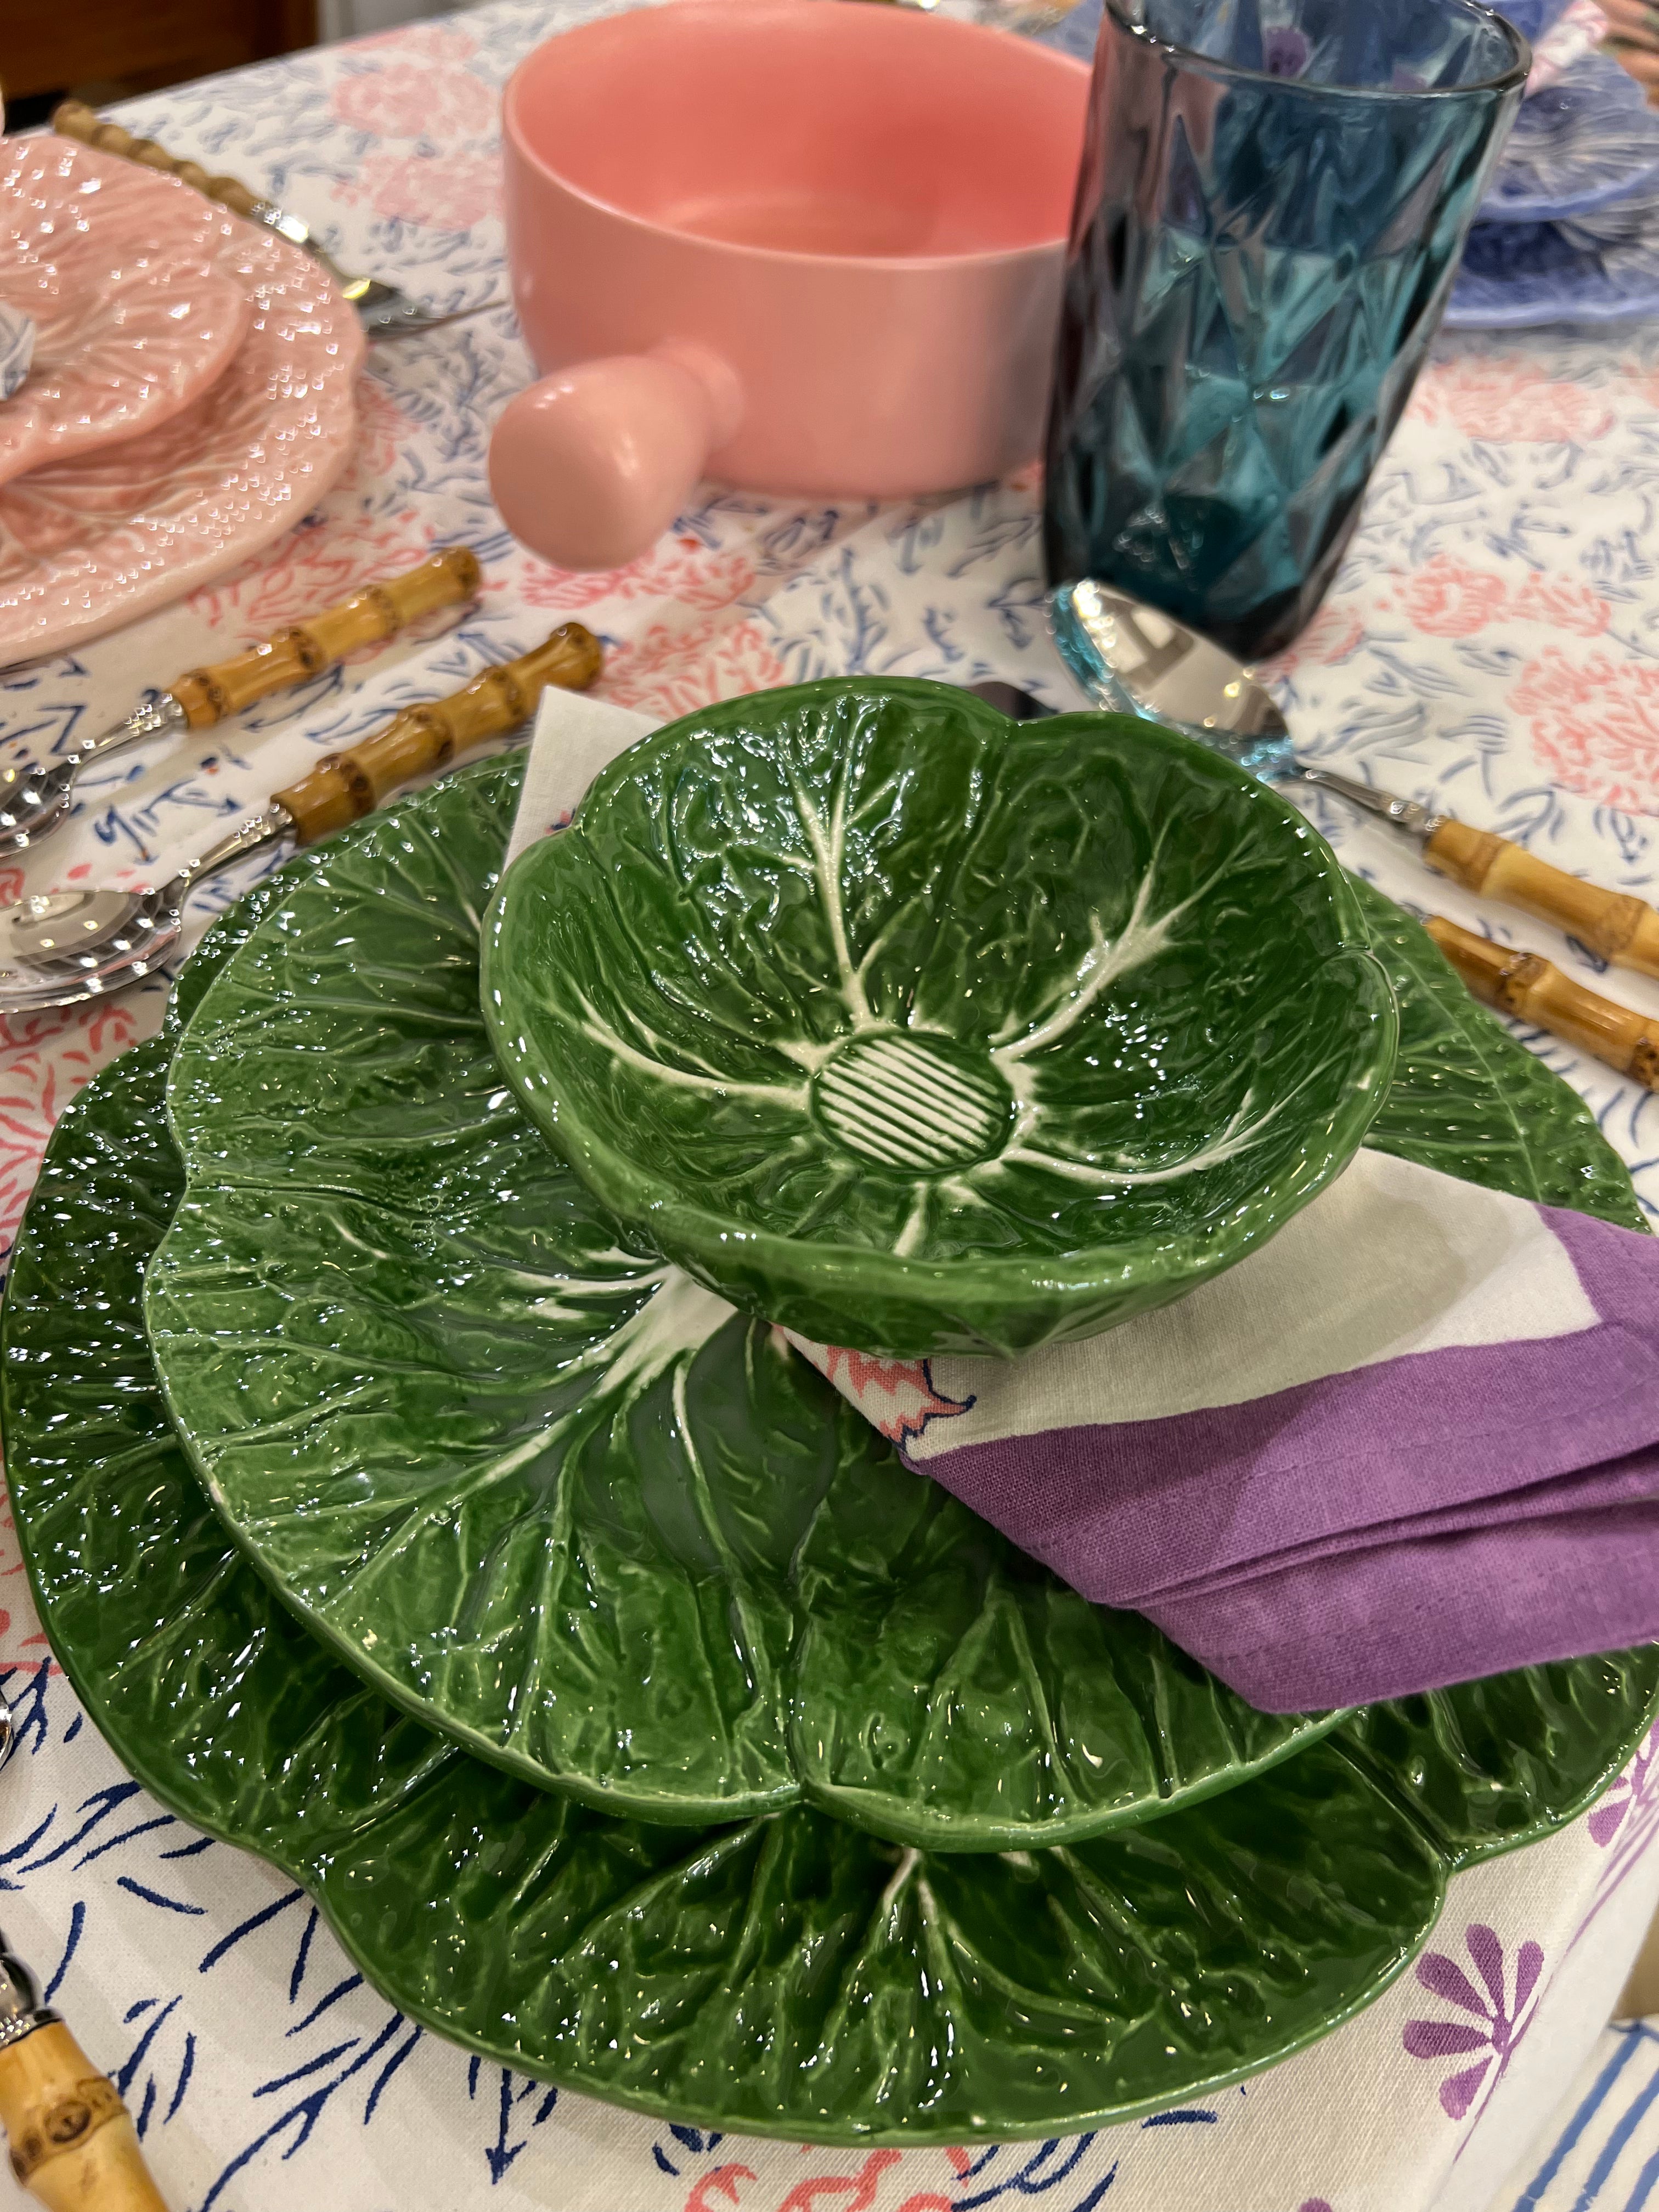 Cabbage Plates